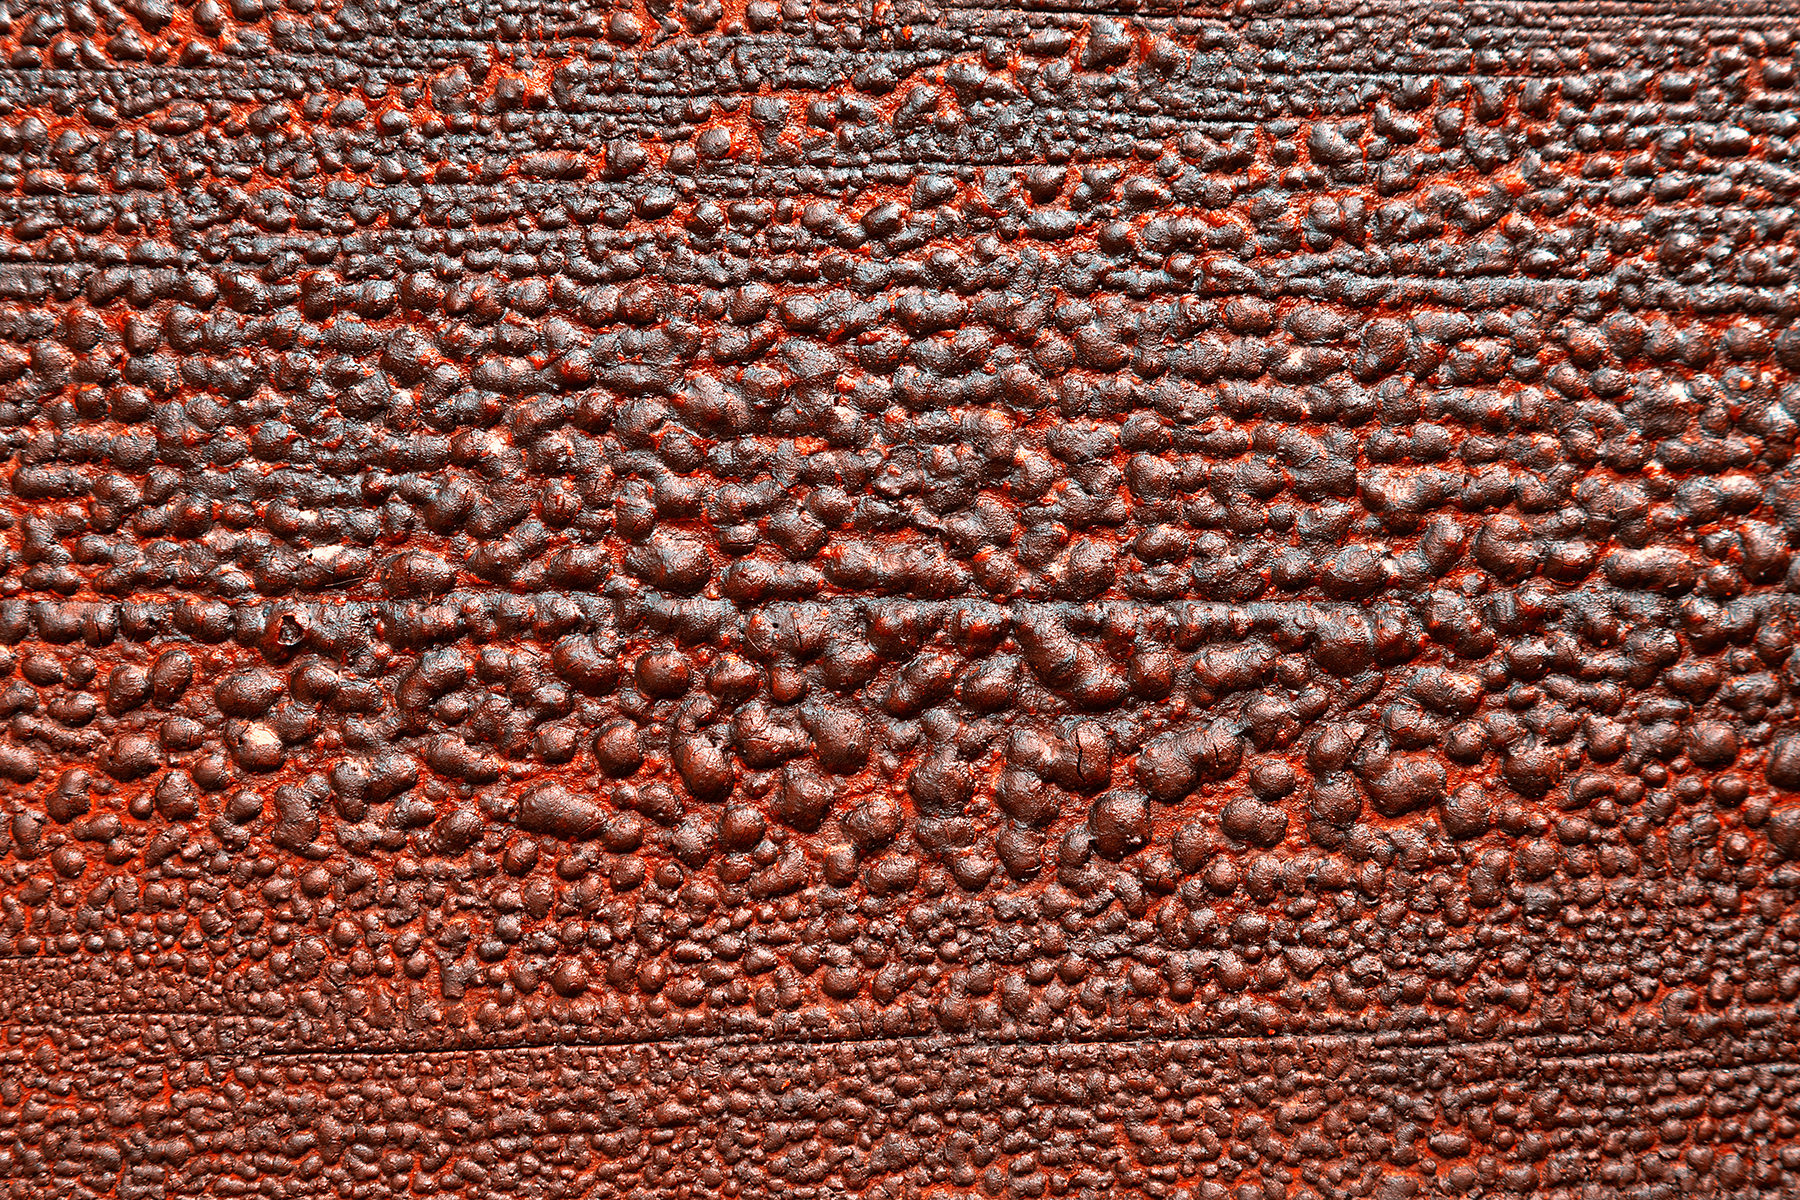 Blood wood boils - hdr texture photo